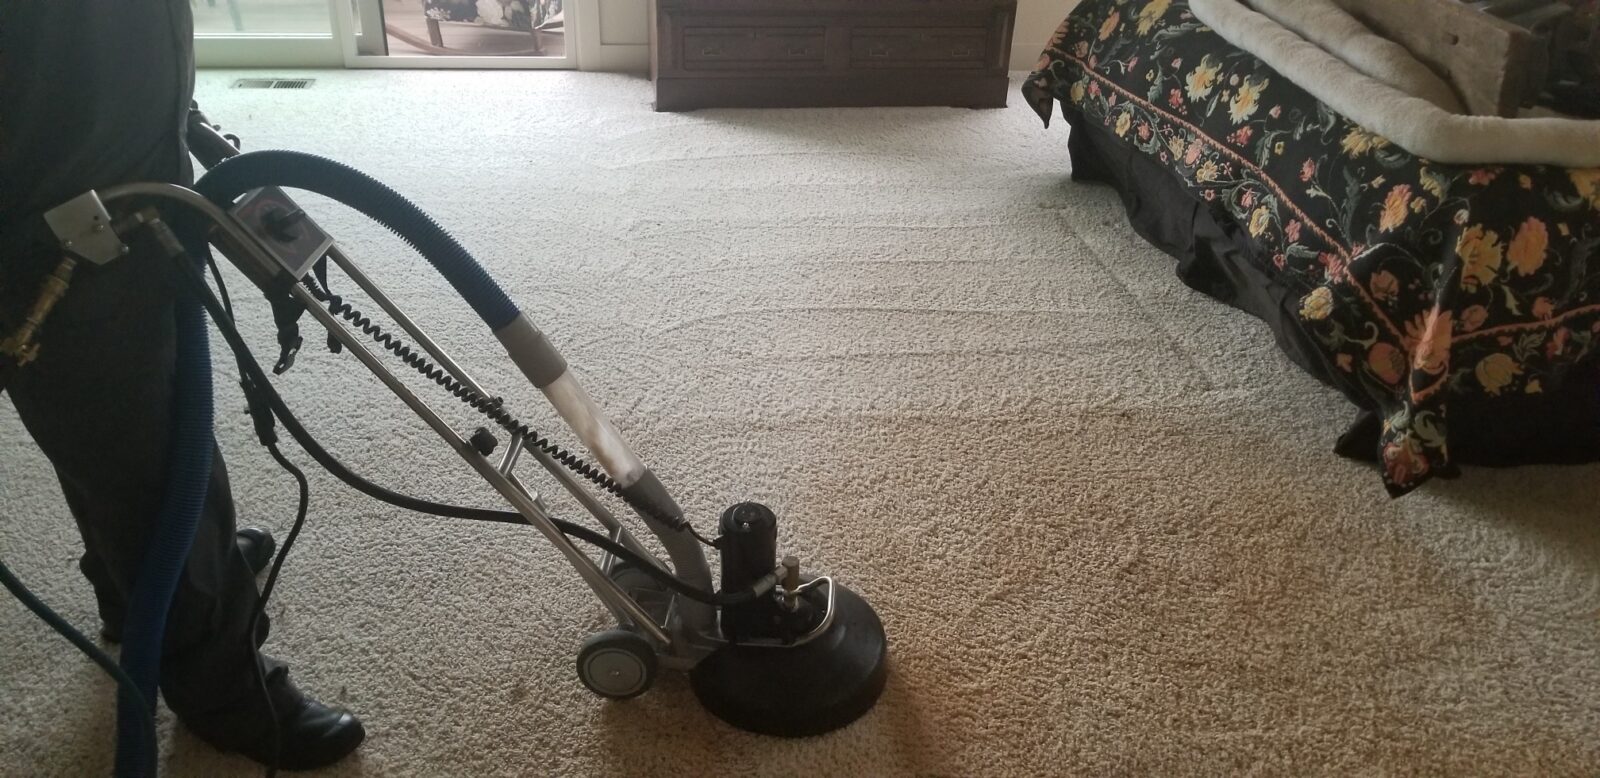 Carpet Cleaning Deals